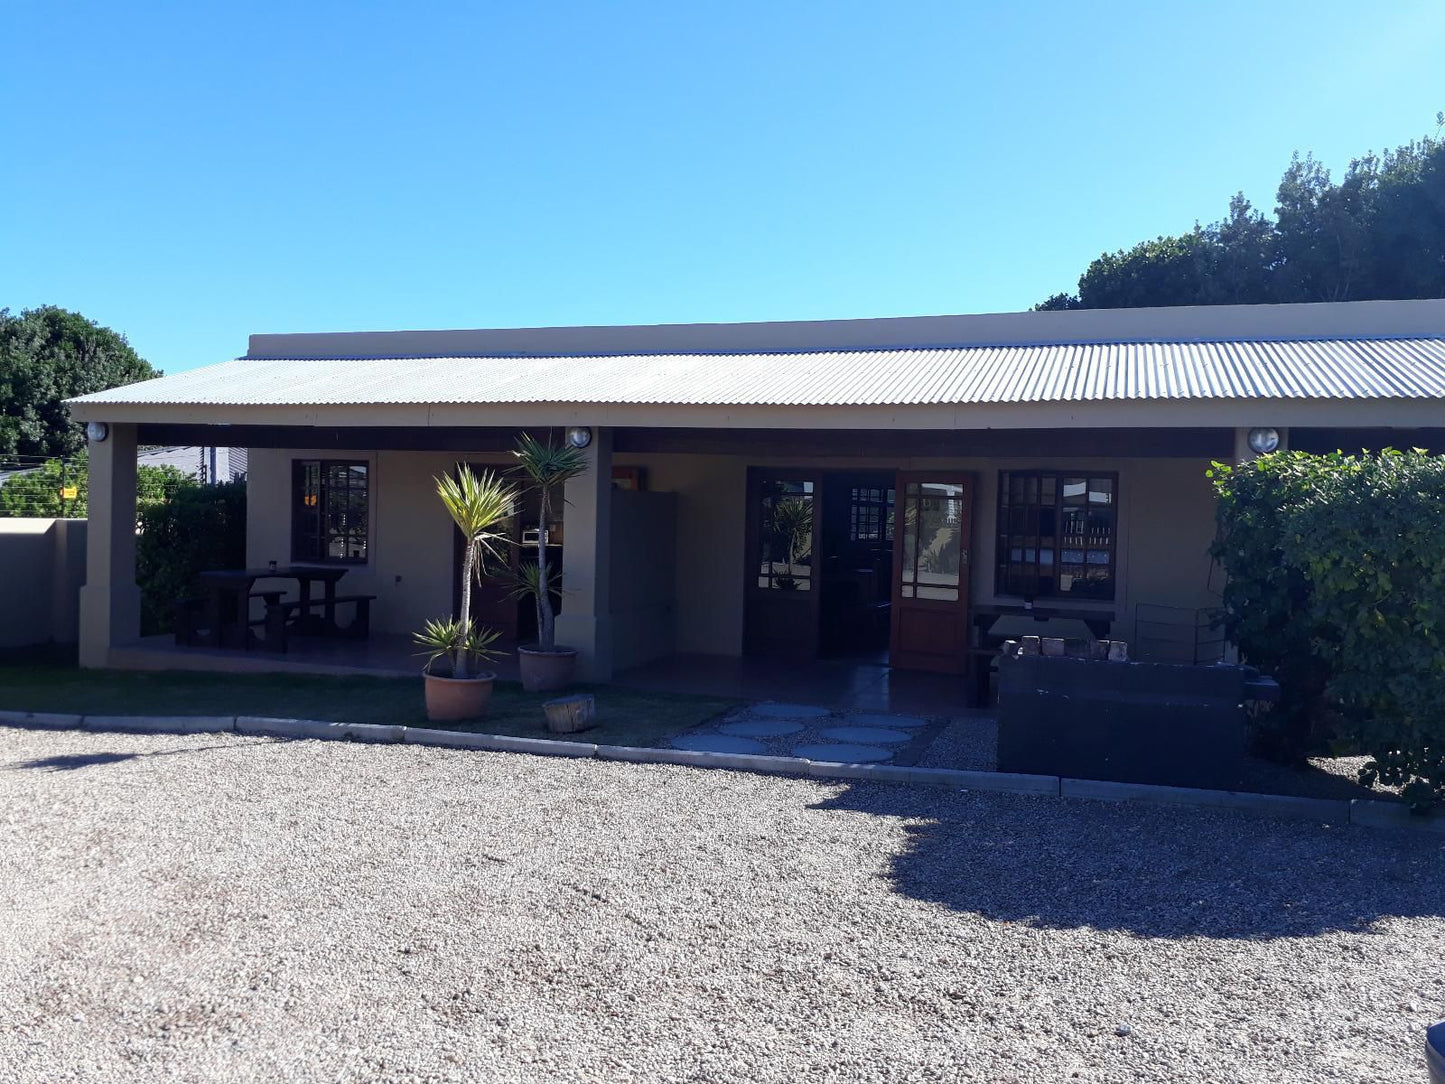 Tourist Lodge Gansbaai Gansbaai Western Cape South Africa House, Building, Architecture